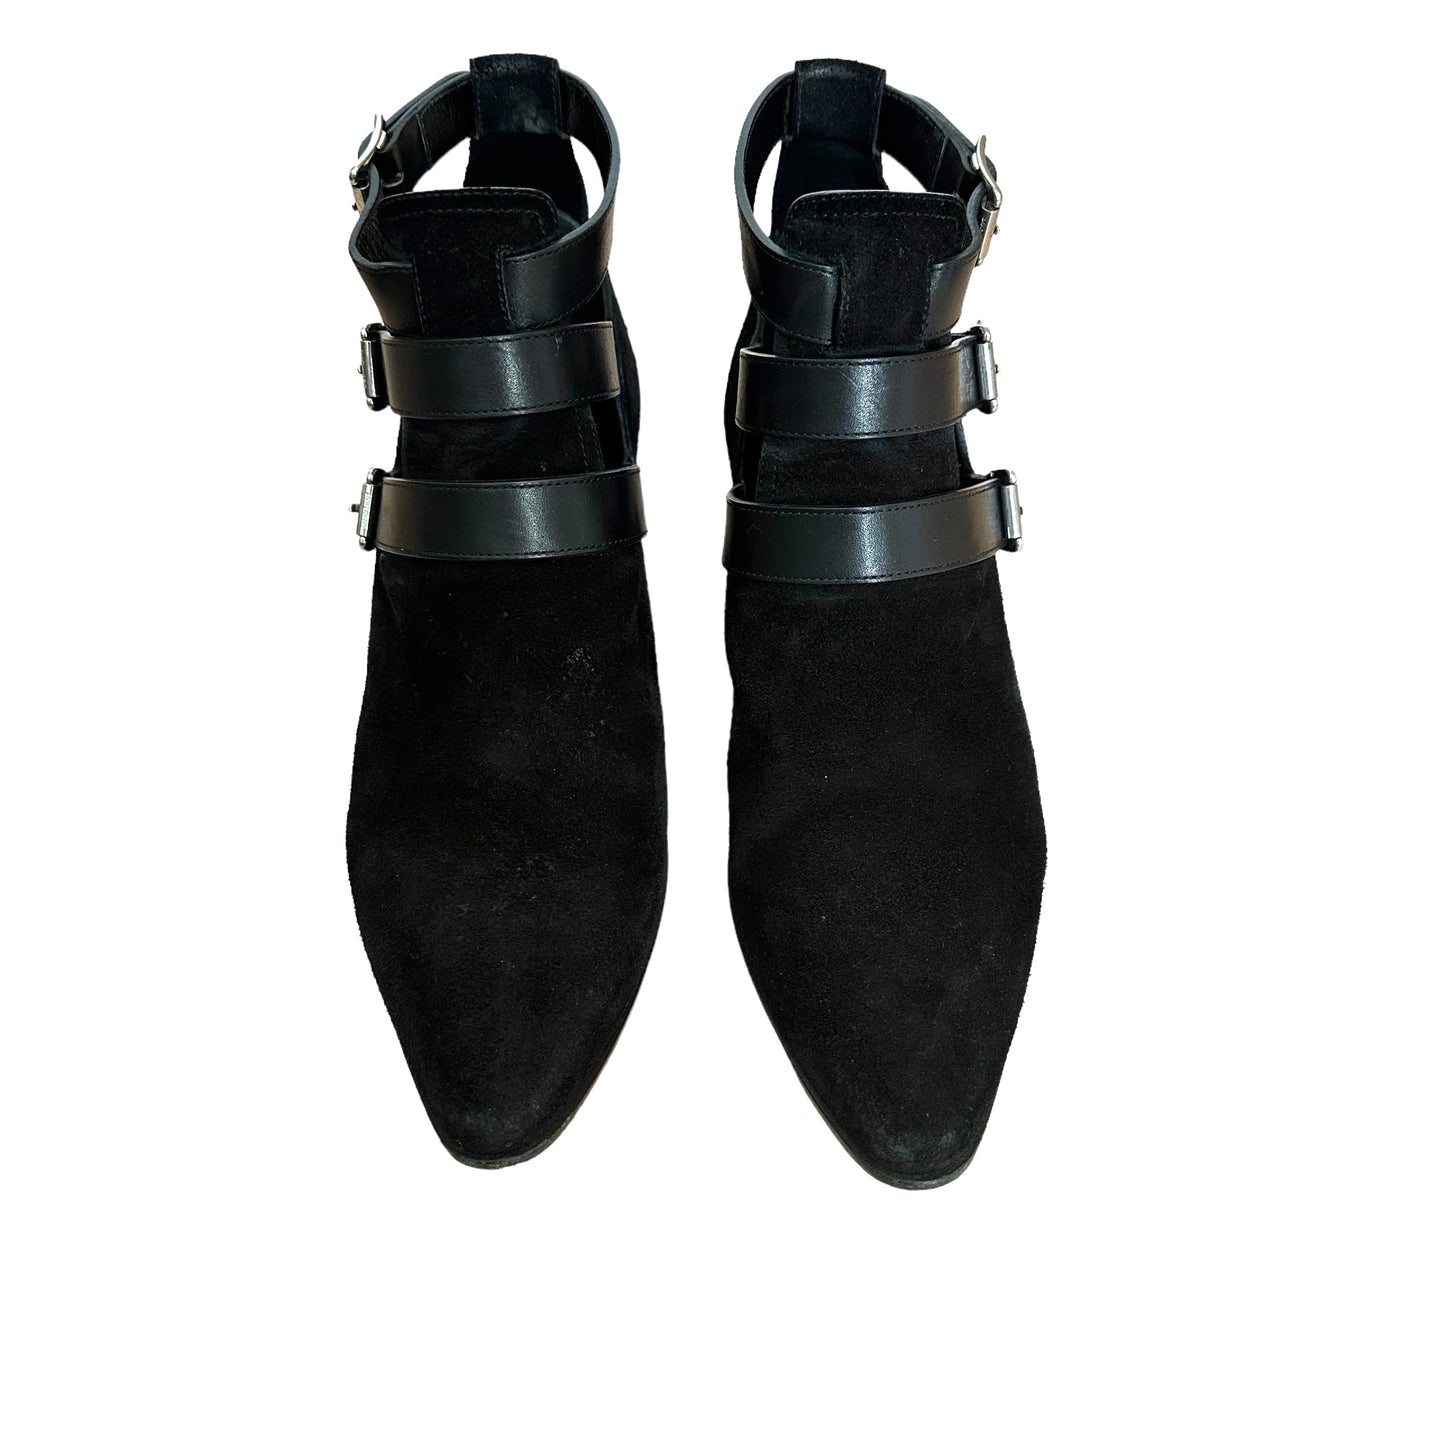 Black Cutout Ankle Boots - 6.5